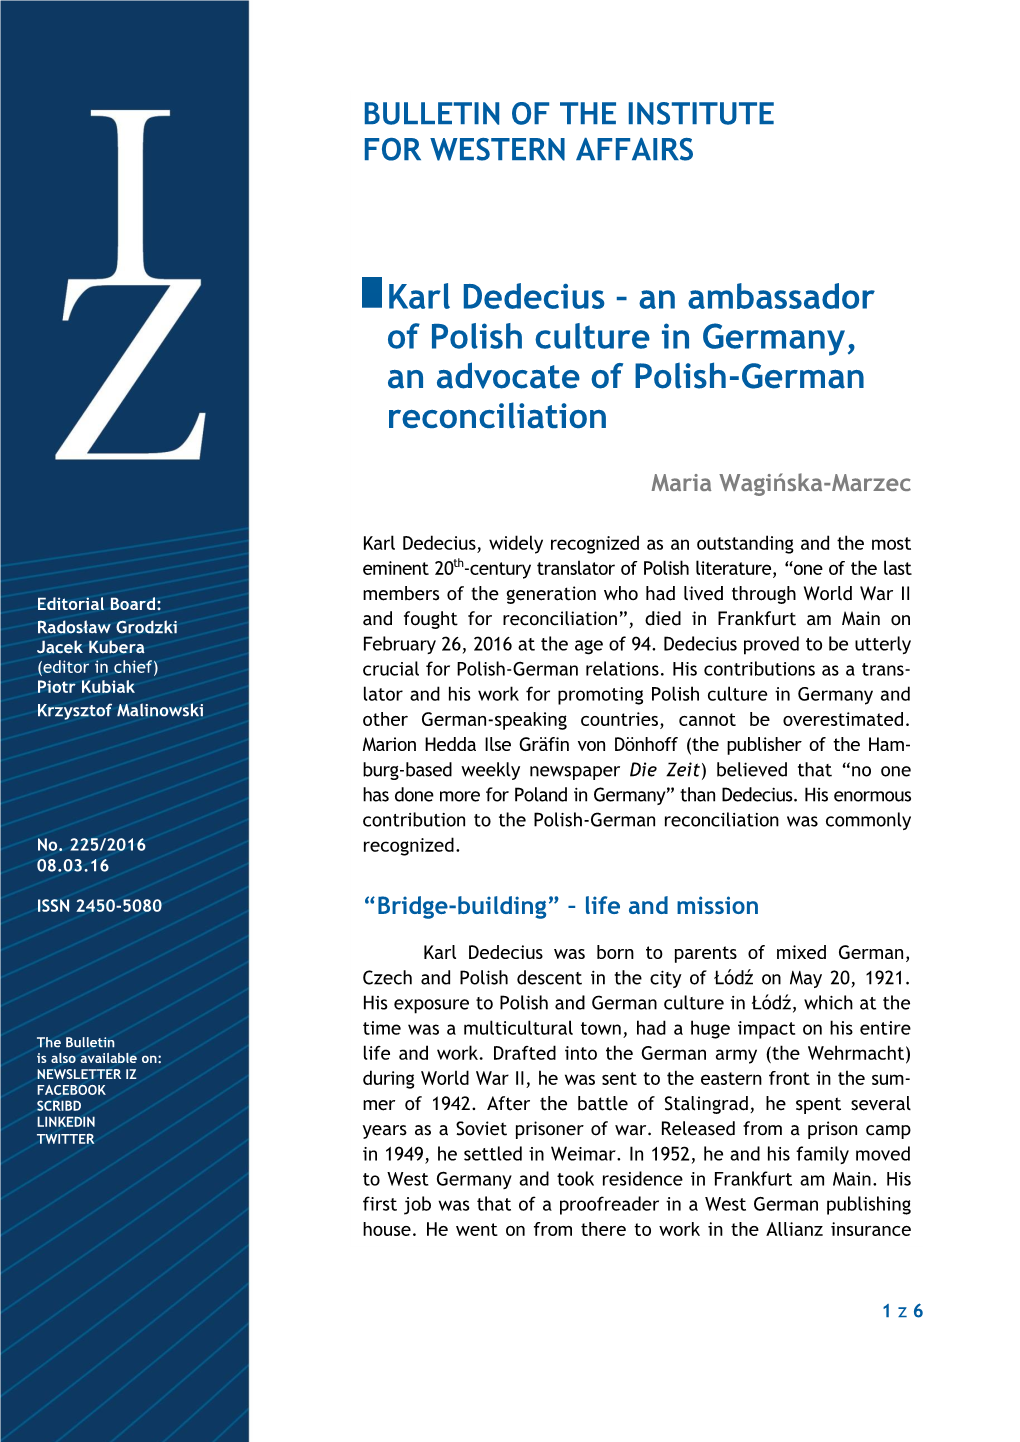 Karl Dedecius – an Ambassador of Polish Culture in Germany, an Advocate of Polish-German Reconciliation